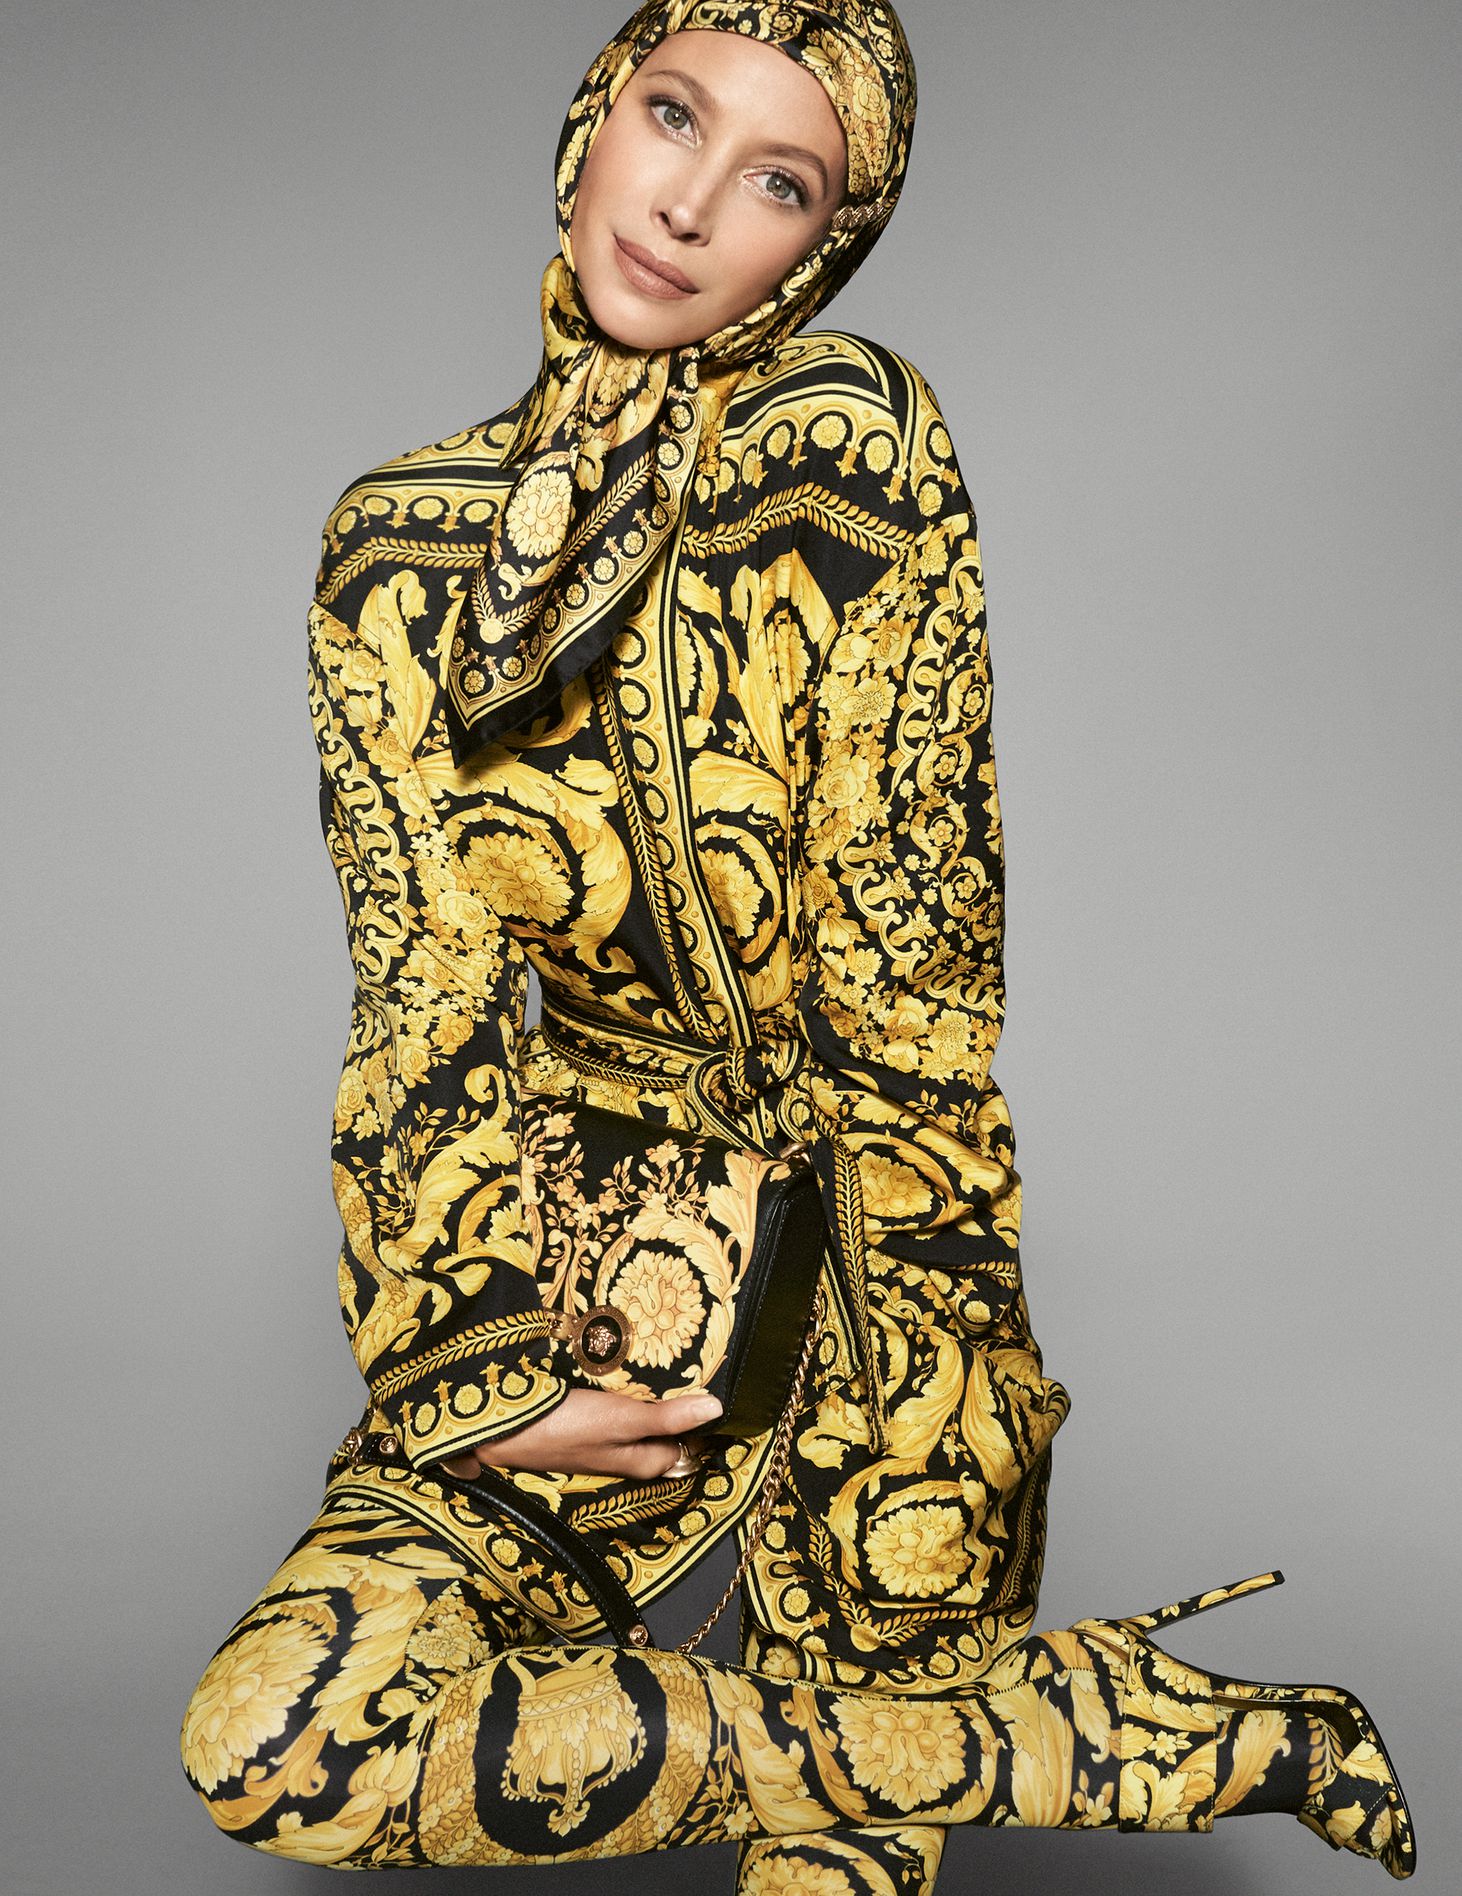 Christy Turlington para Versace / Steven Meisel